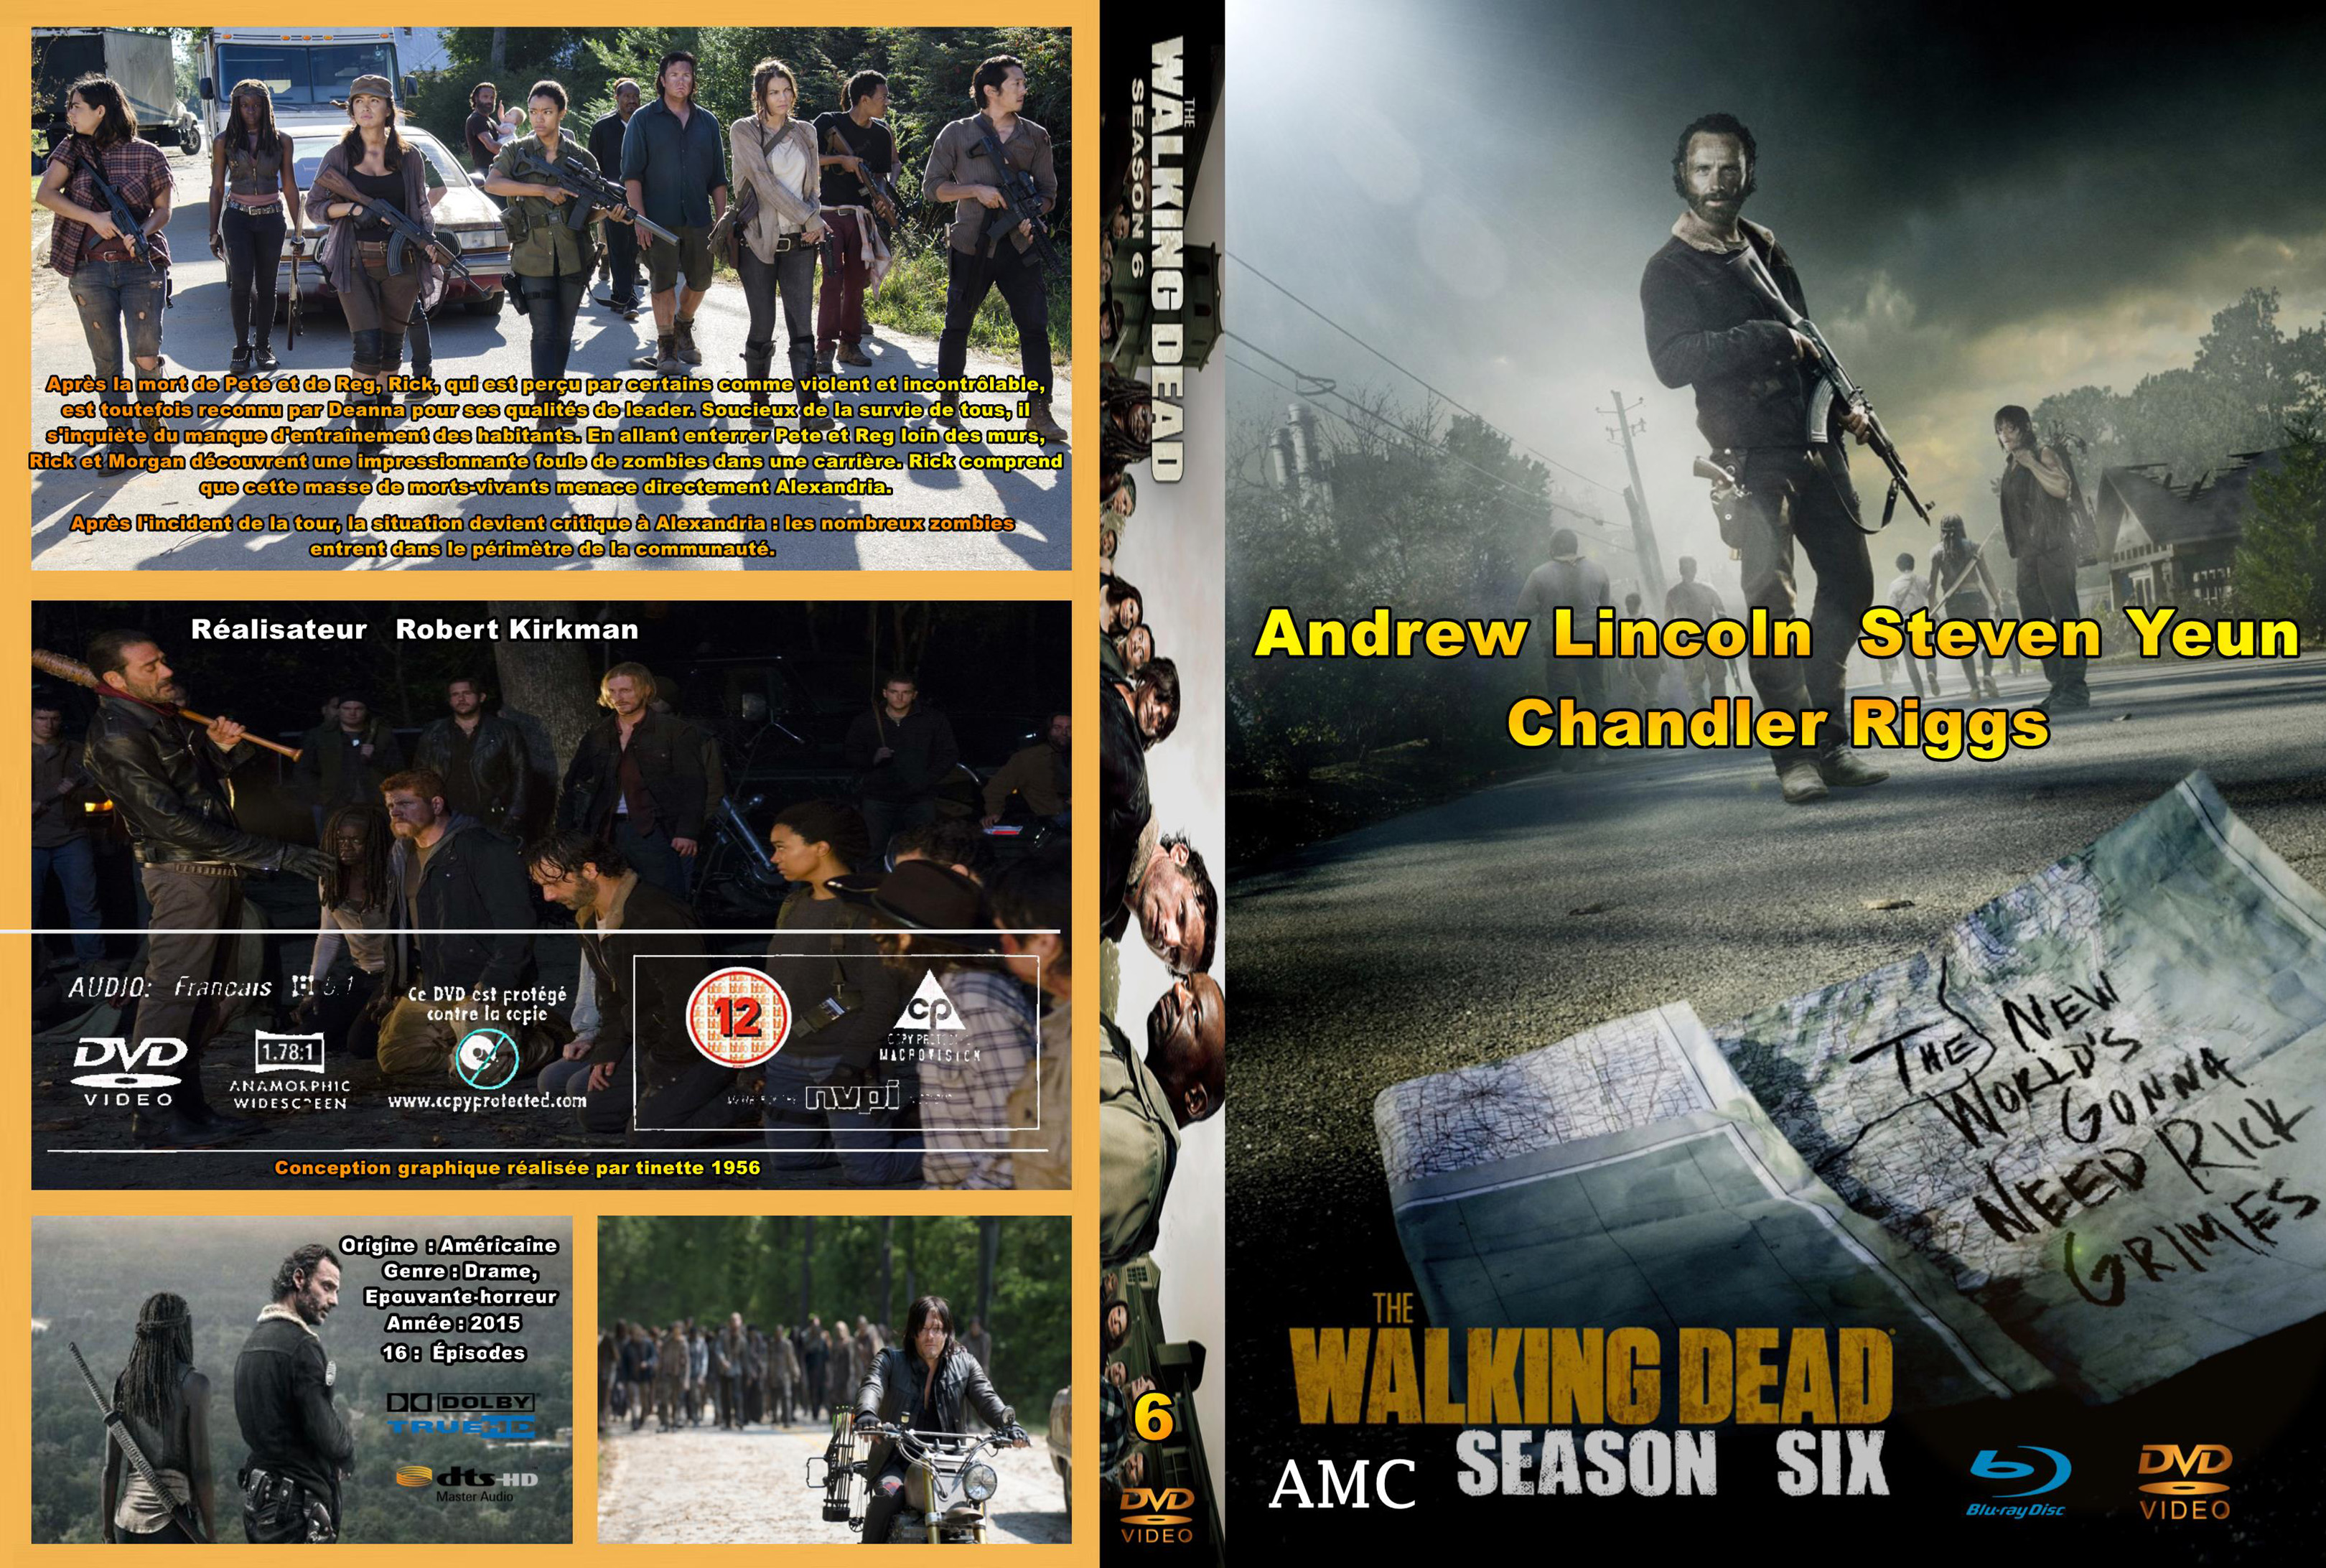 Jaquette DVD The Walking dead Saison 6 custom